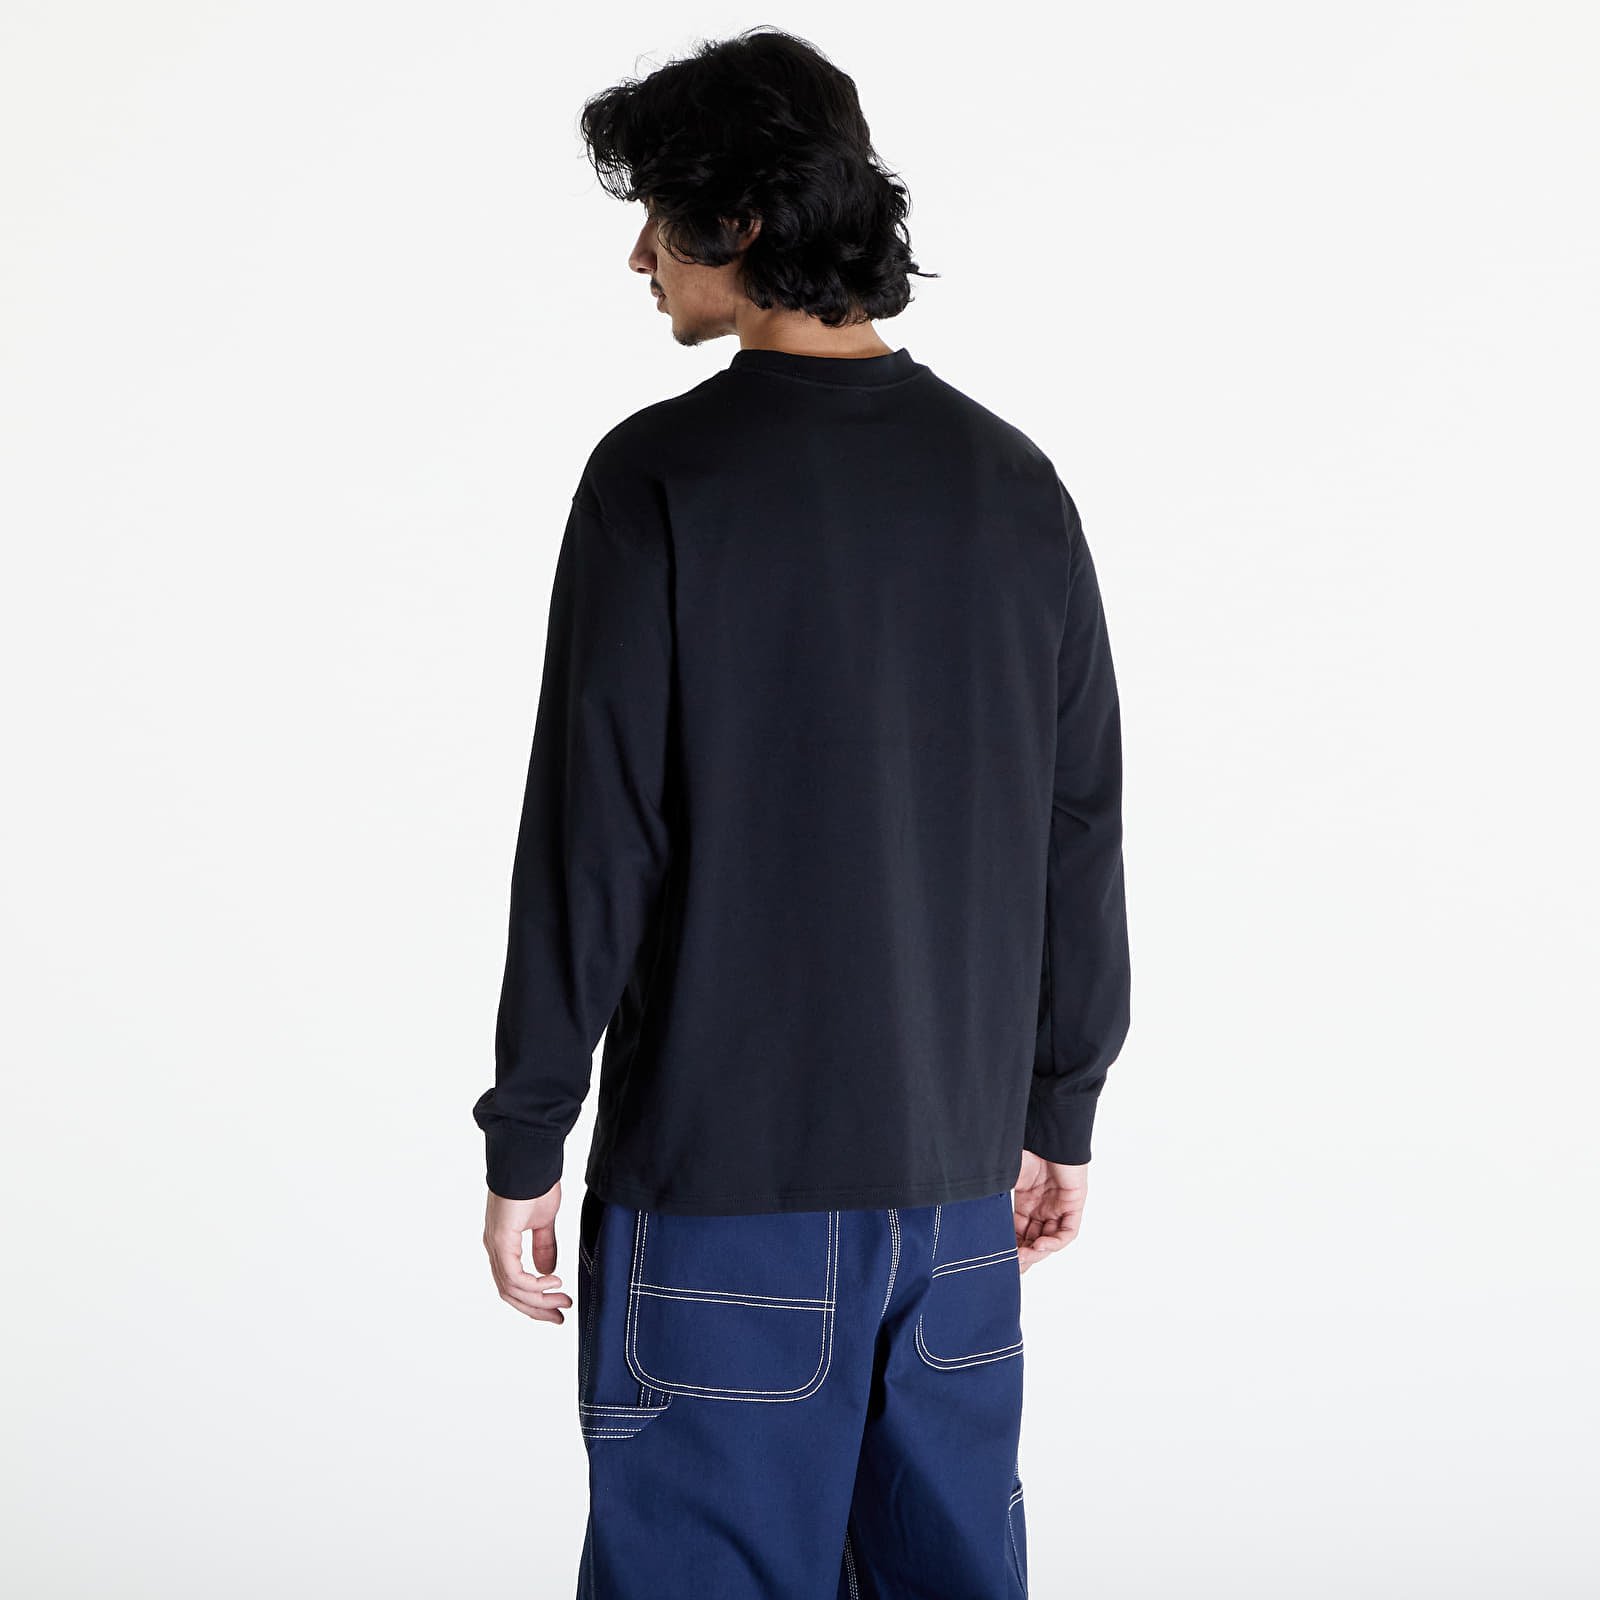 Men's Long-Sleeve Dri-FIT T-Shirt